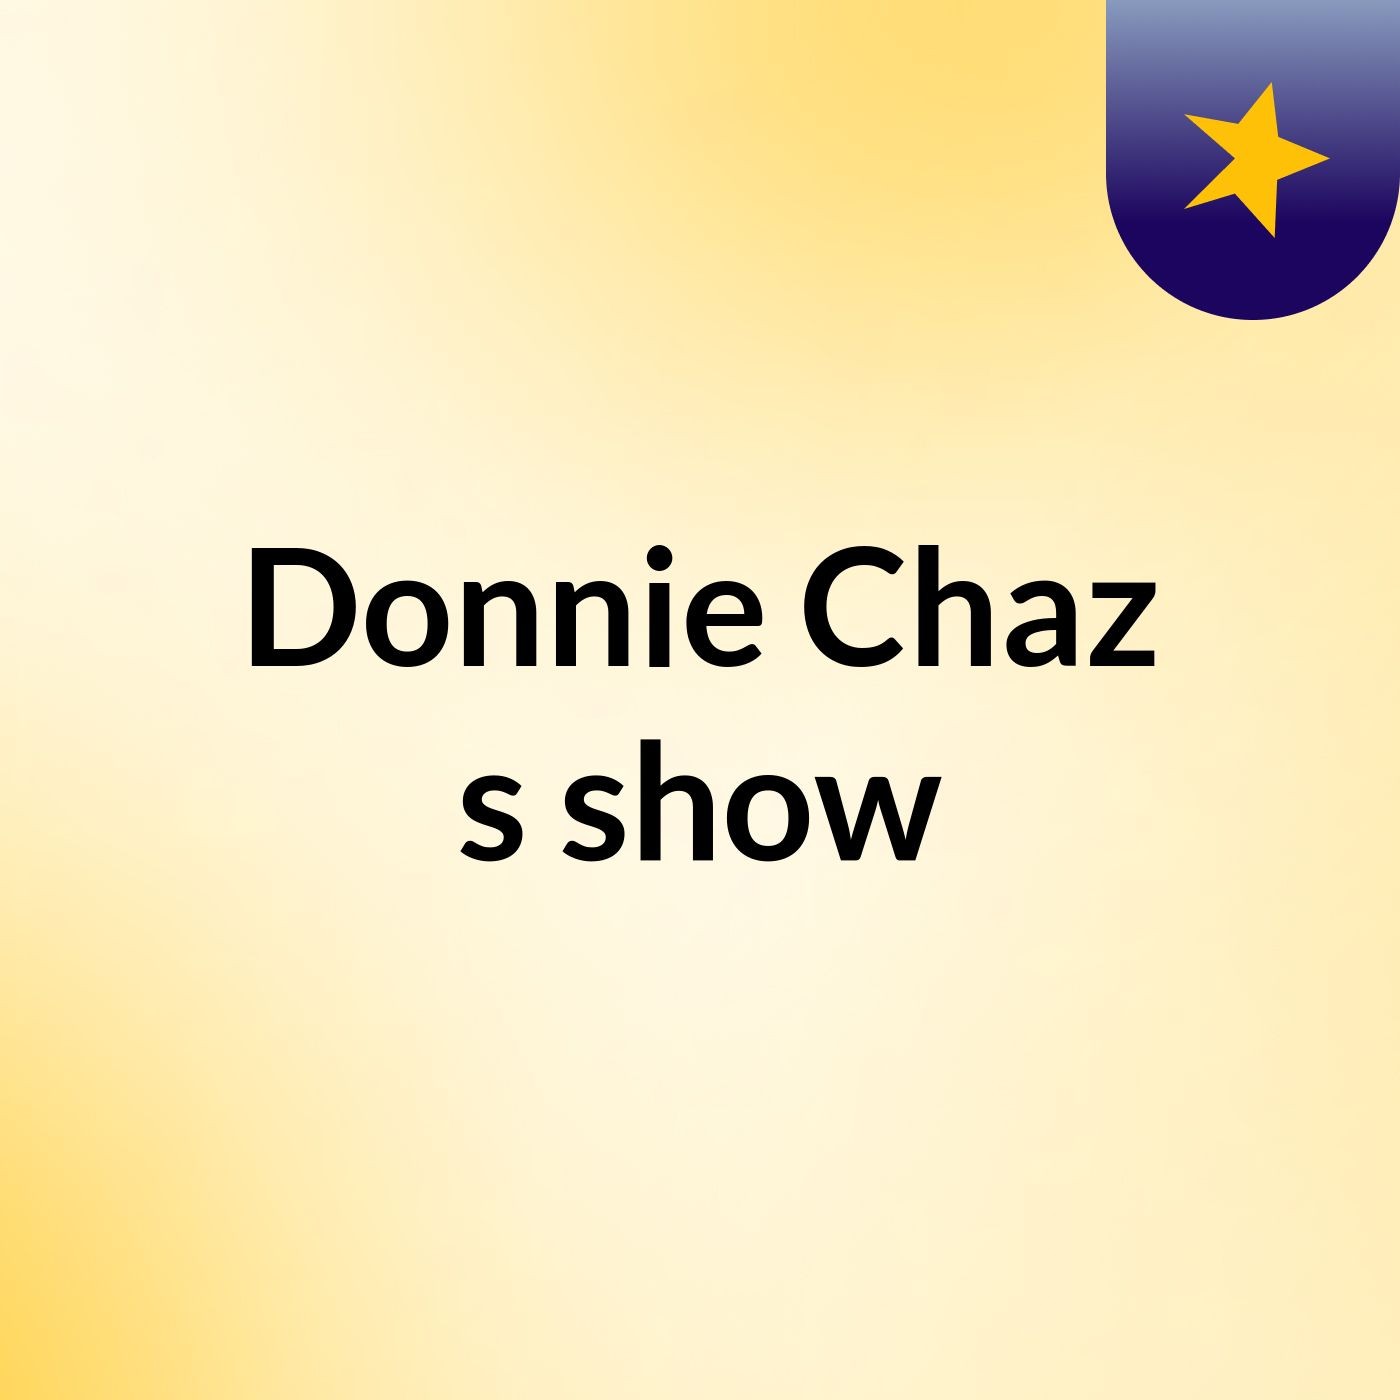 Episode 3 - Donnie Chaz's show